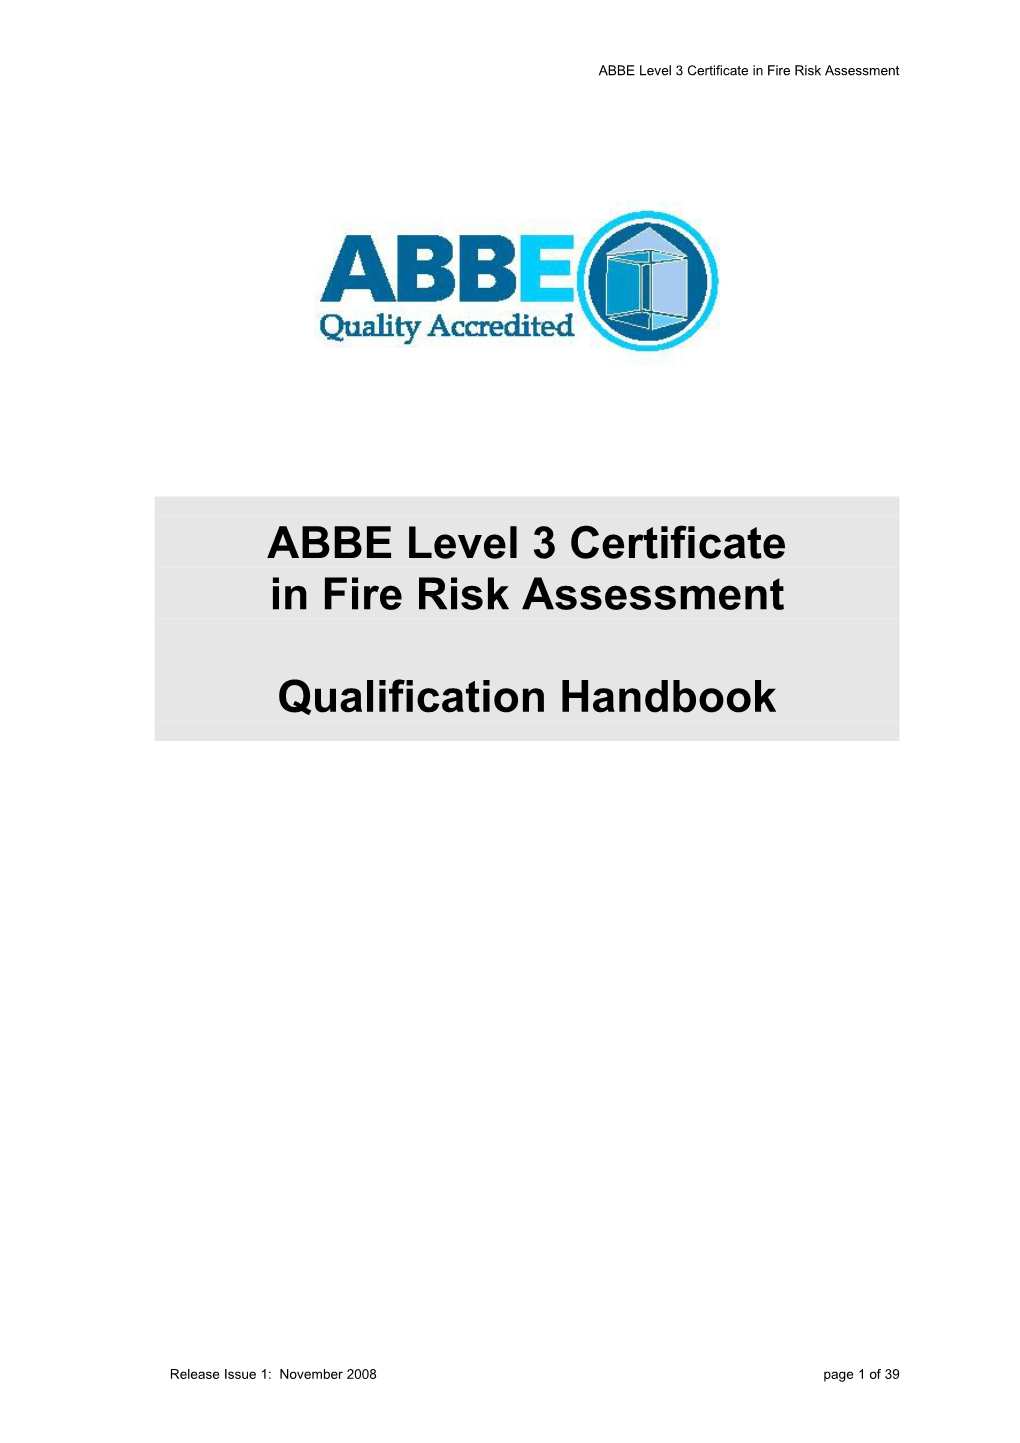 ABBE Level 3 Certificate in Fire Risk Assessment